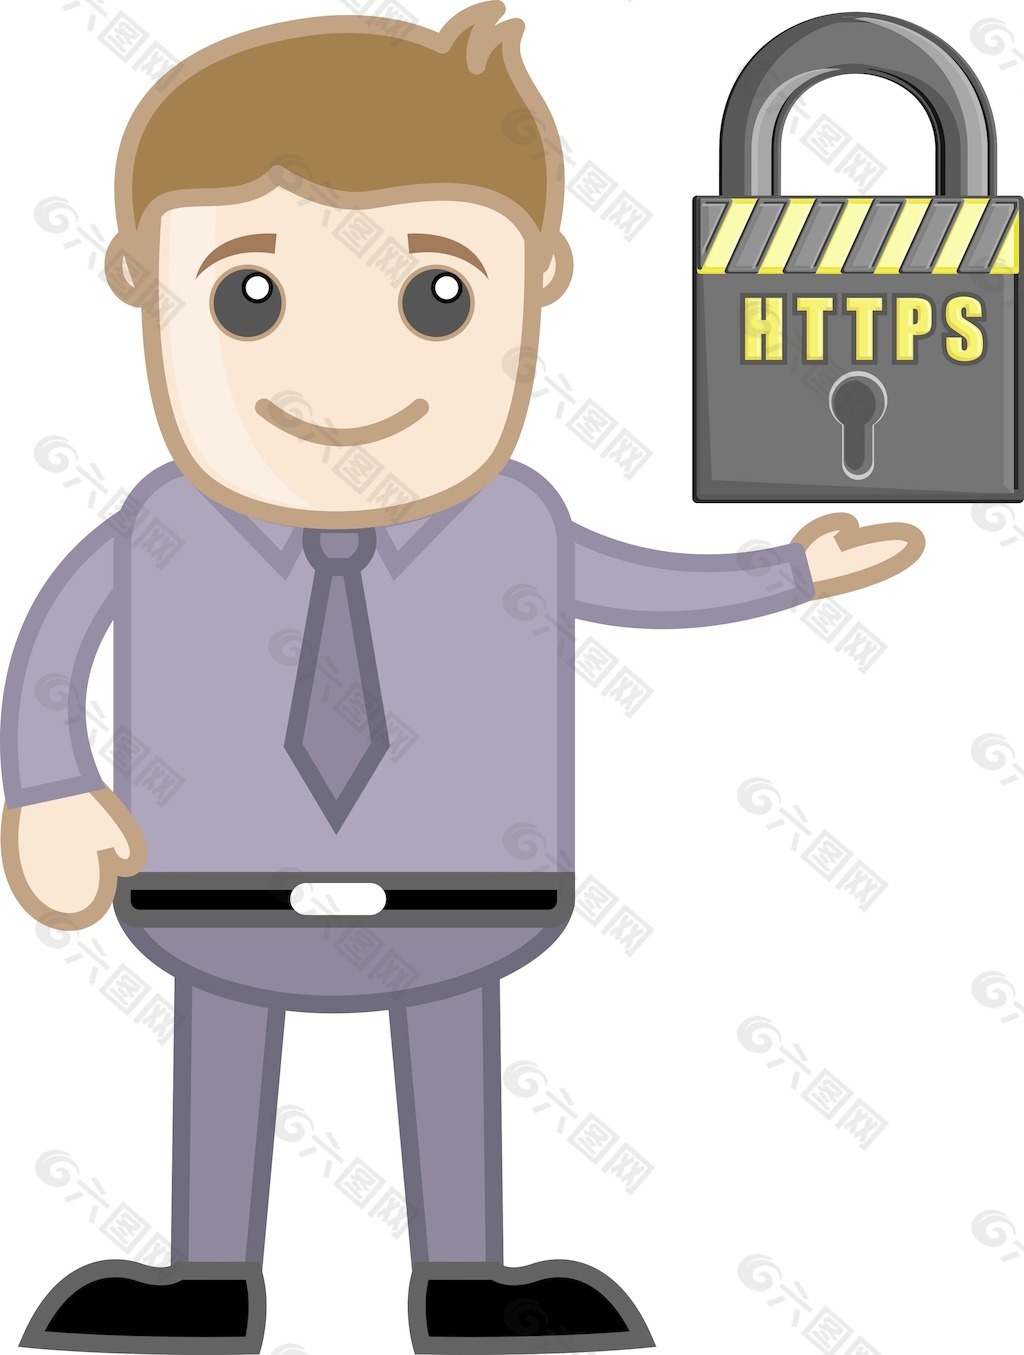 HTTPS安全网站-卡通矢量图